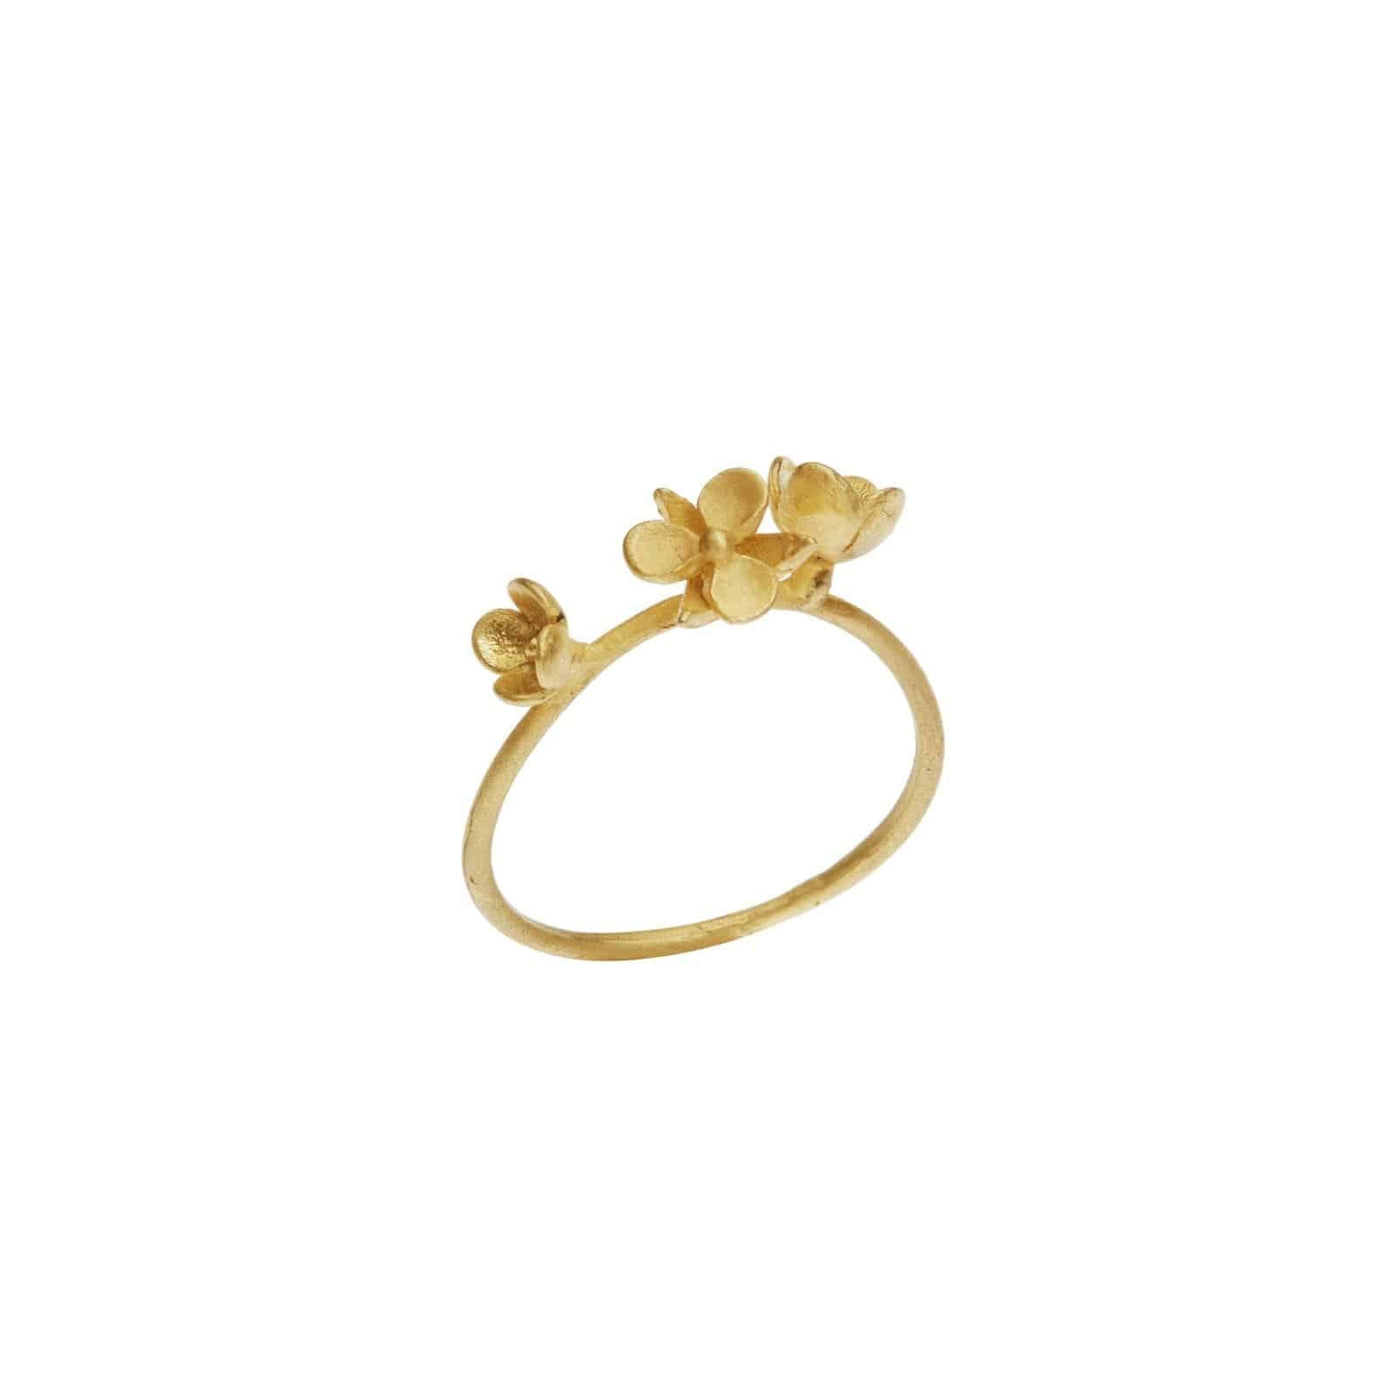 Blooming 3 Flower Ring - Joanna Peters - Ileana Makri store